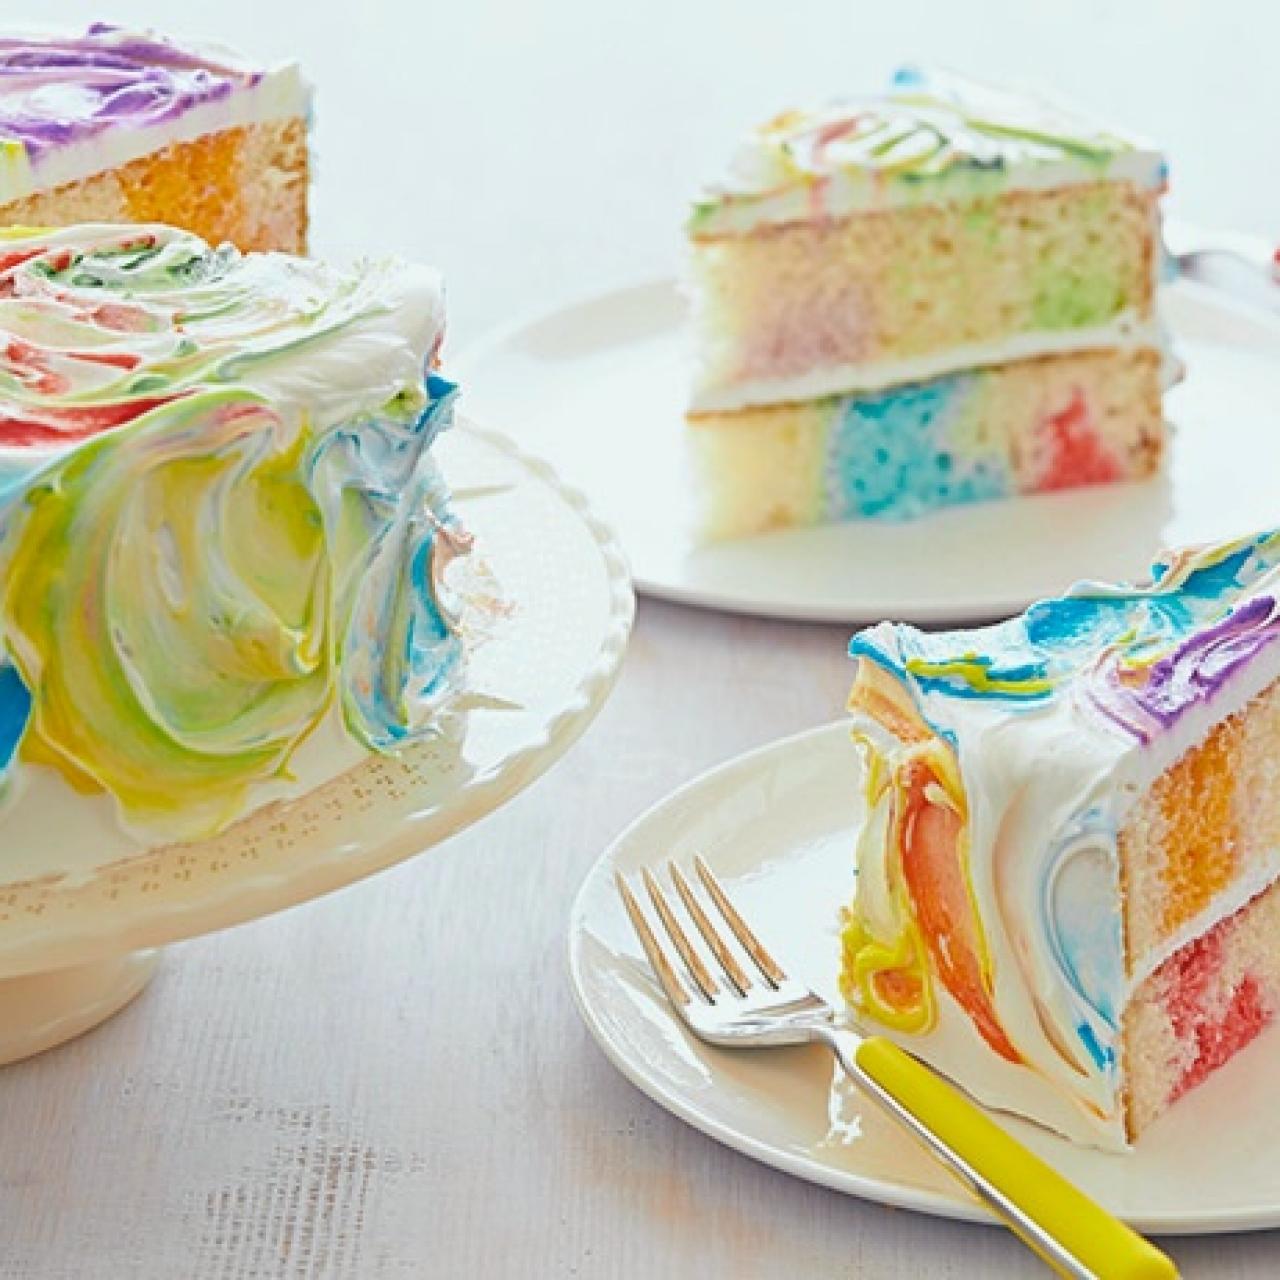 Rainbow Layer Cake recipe by Shipra Khanna on Times Food